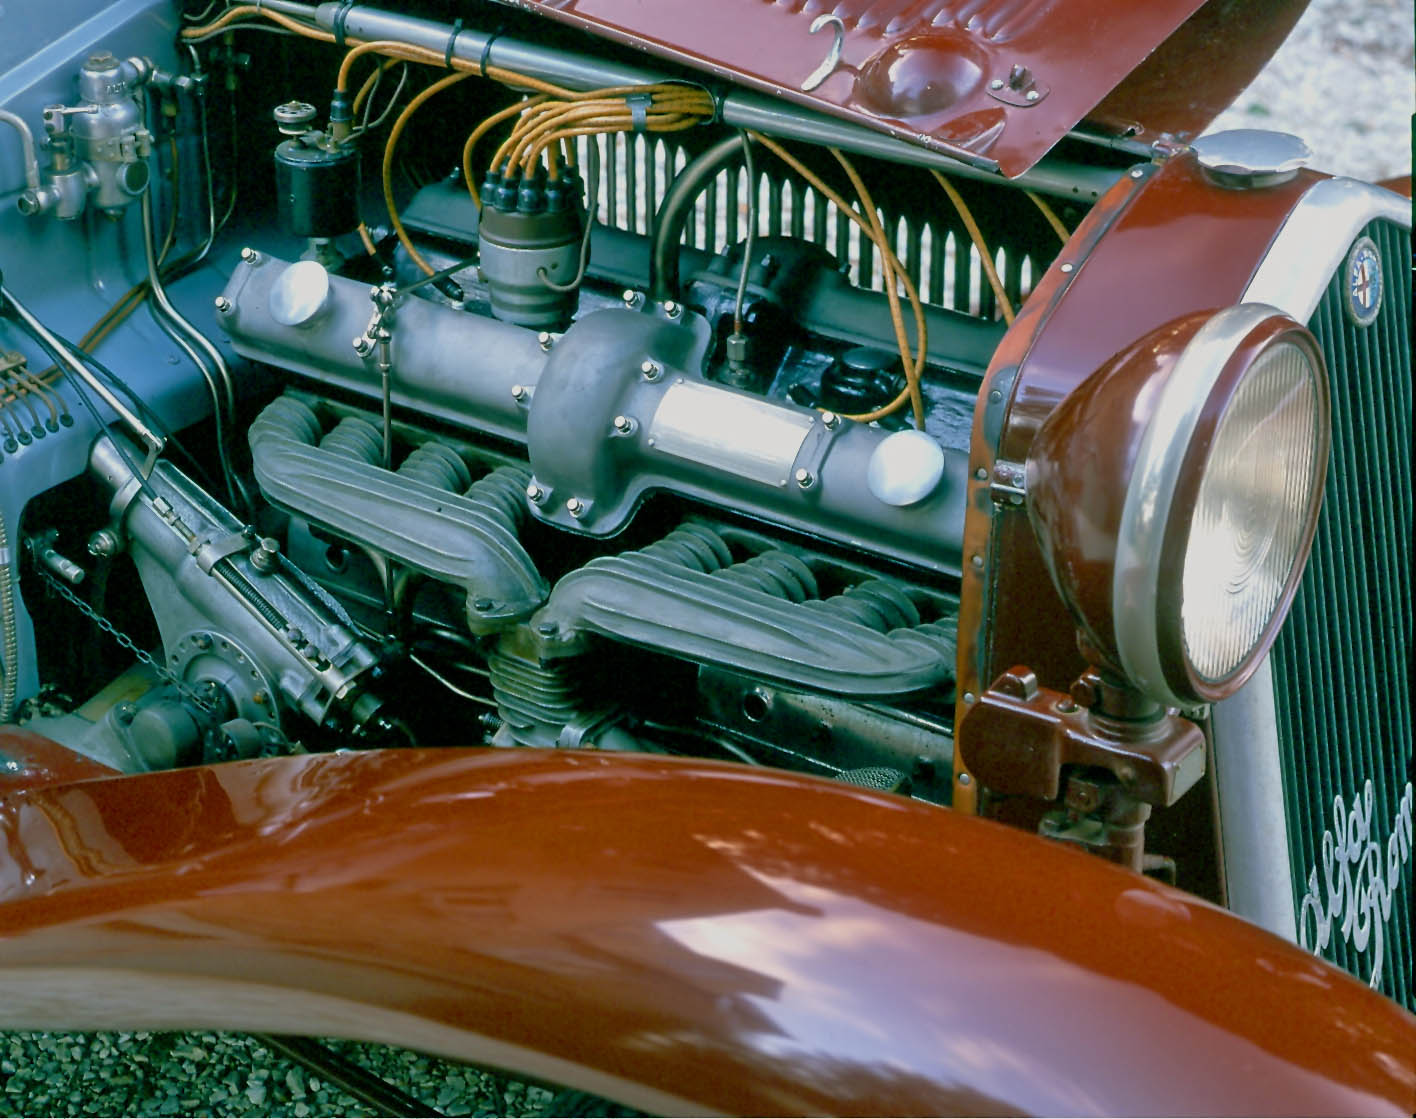 1933 Alfa Romeo 2300